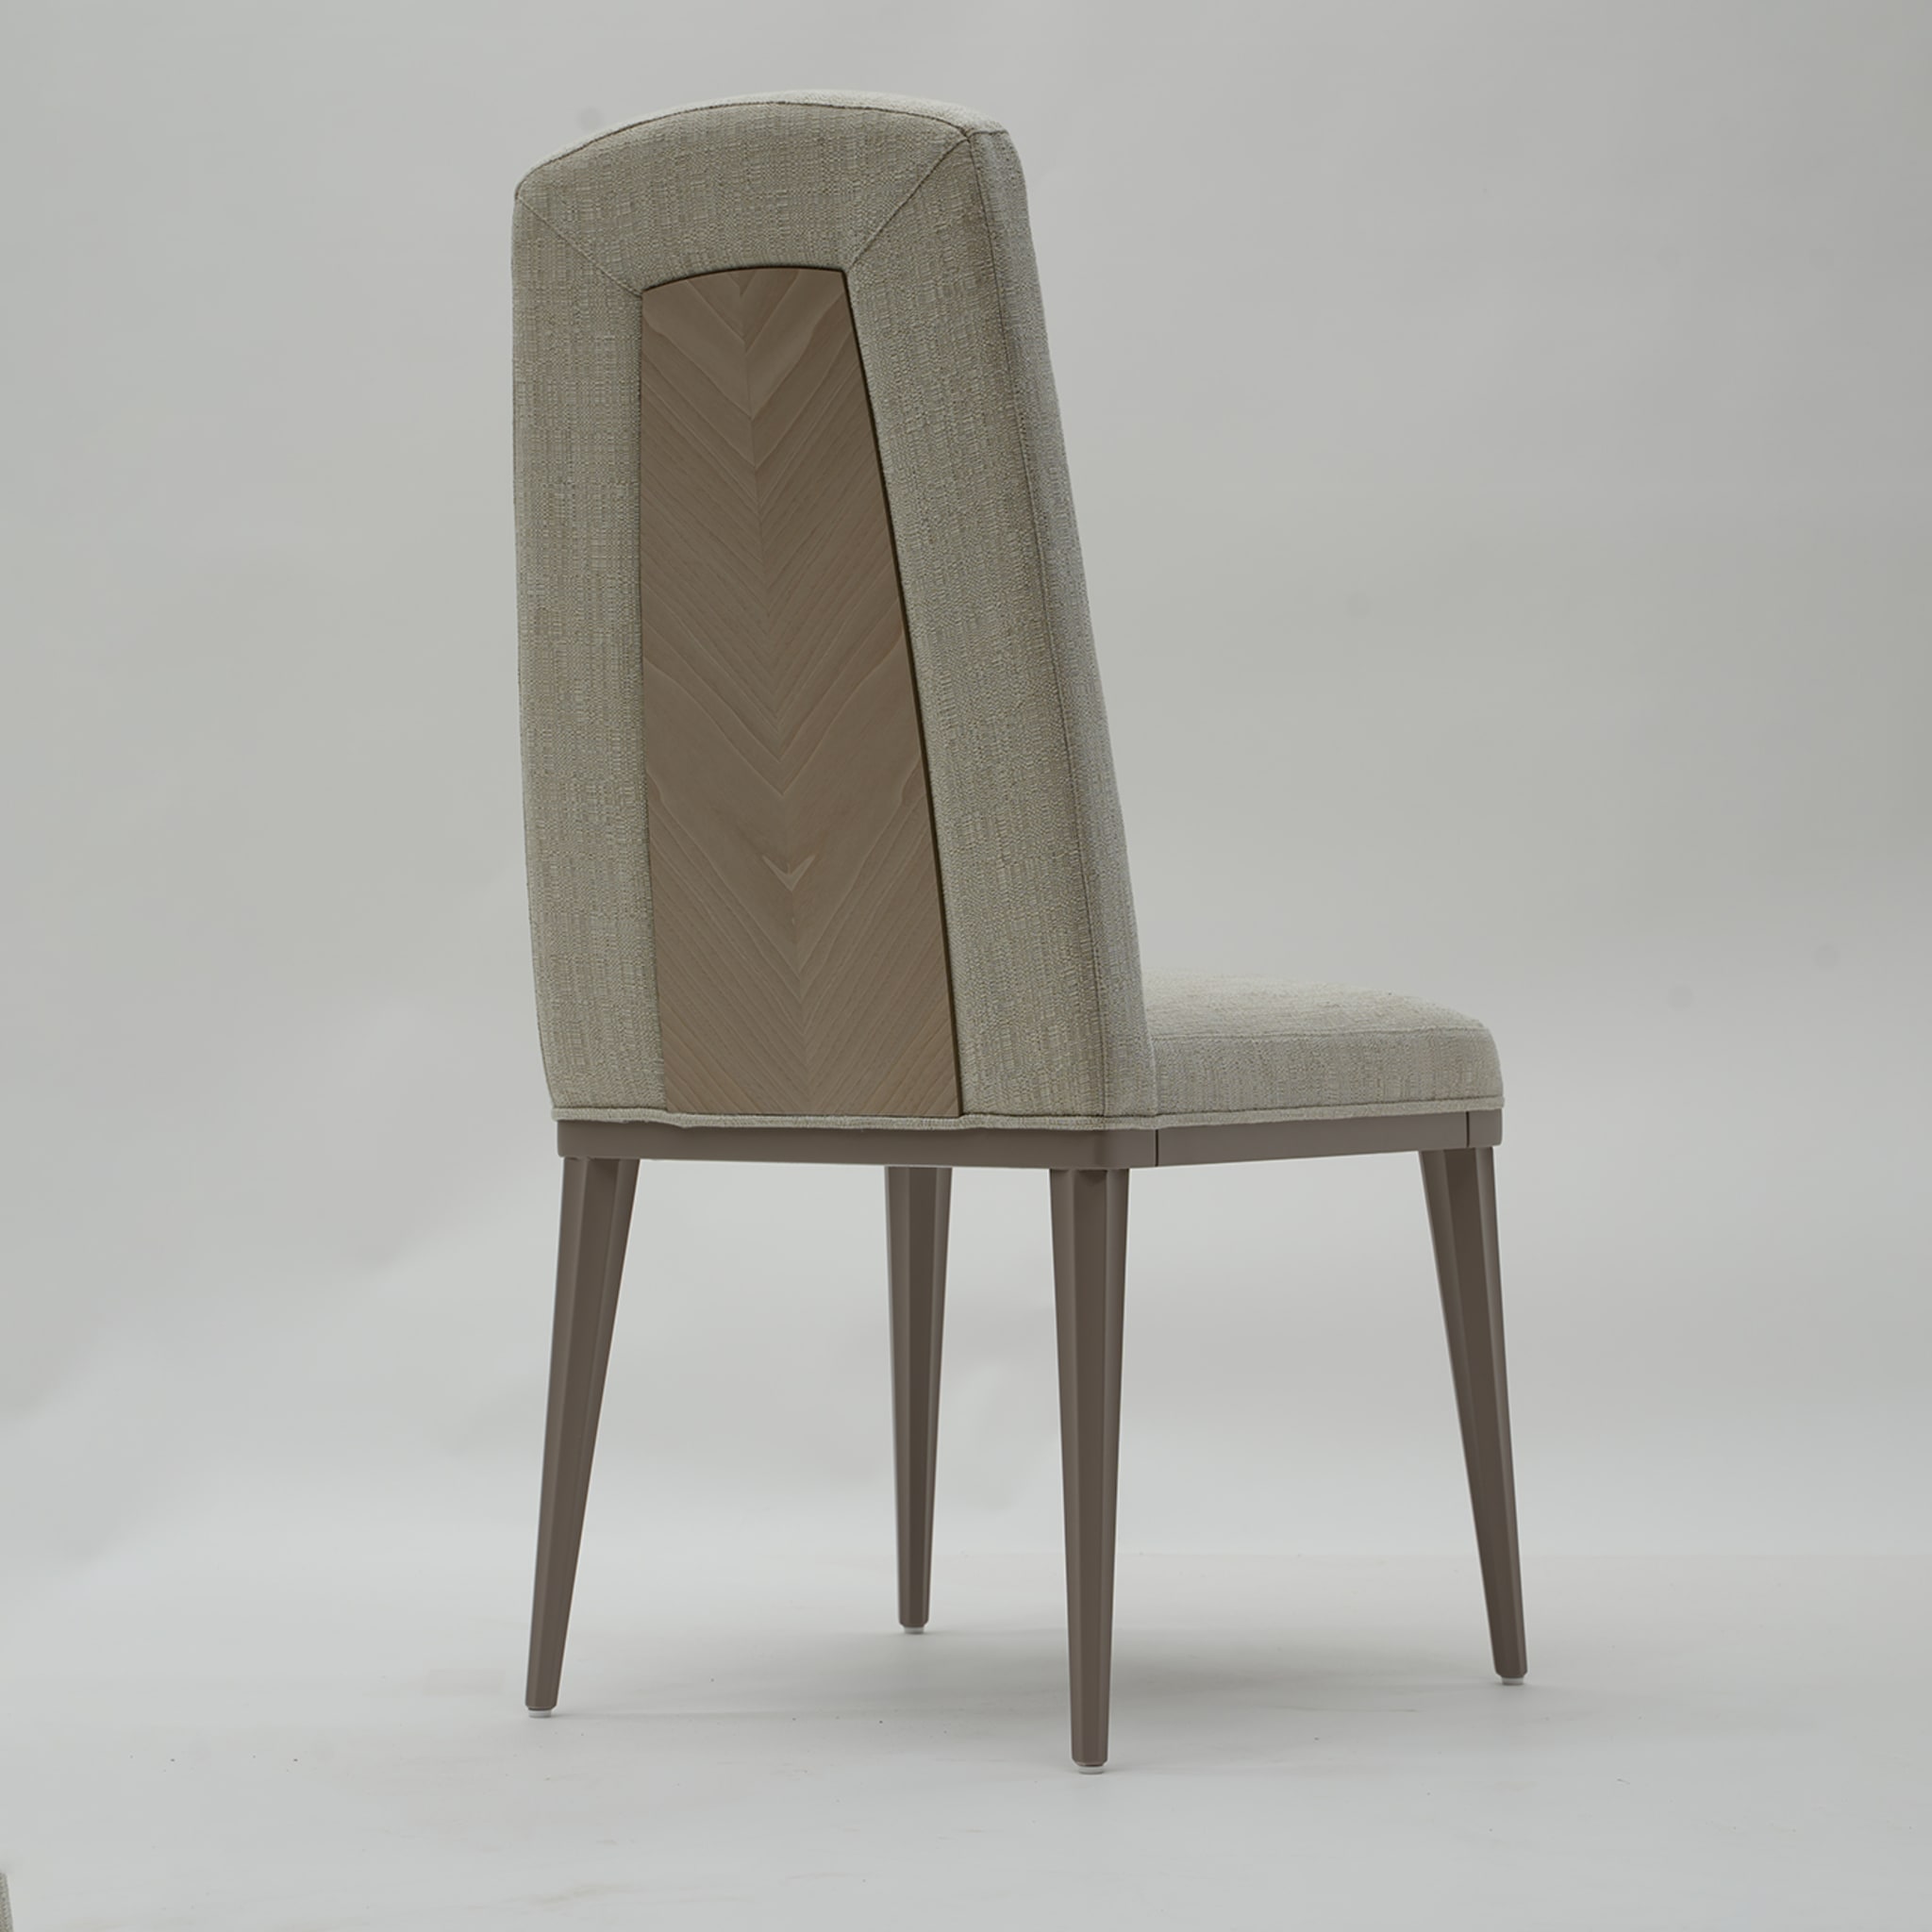 Denice Gray & Beige Chair - Alternative view 1